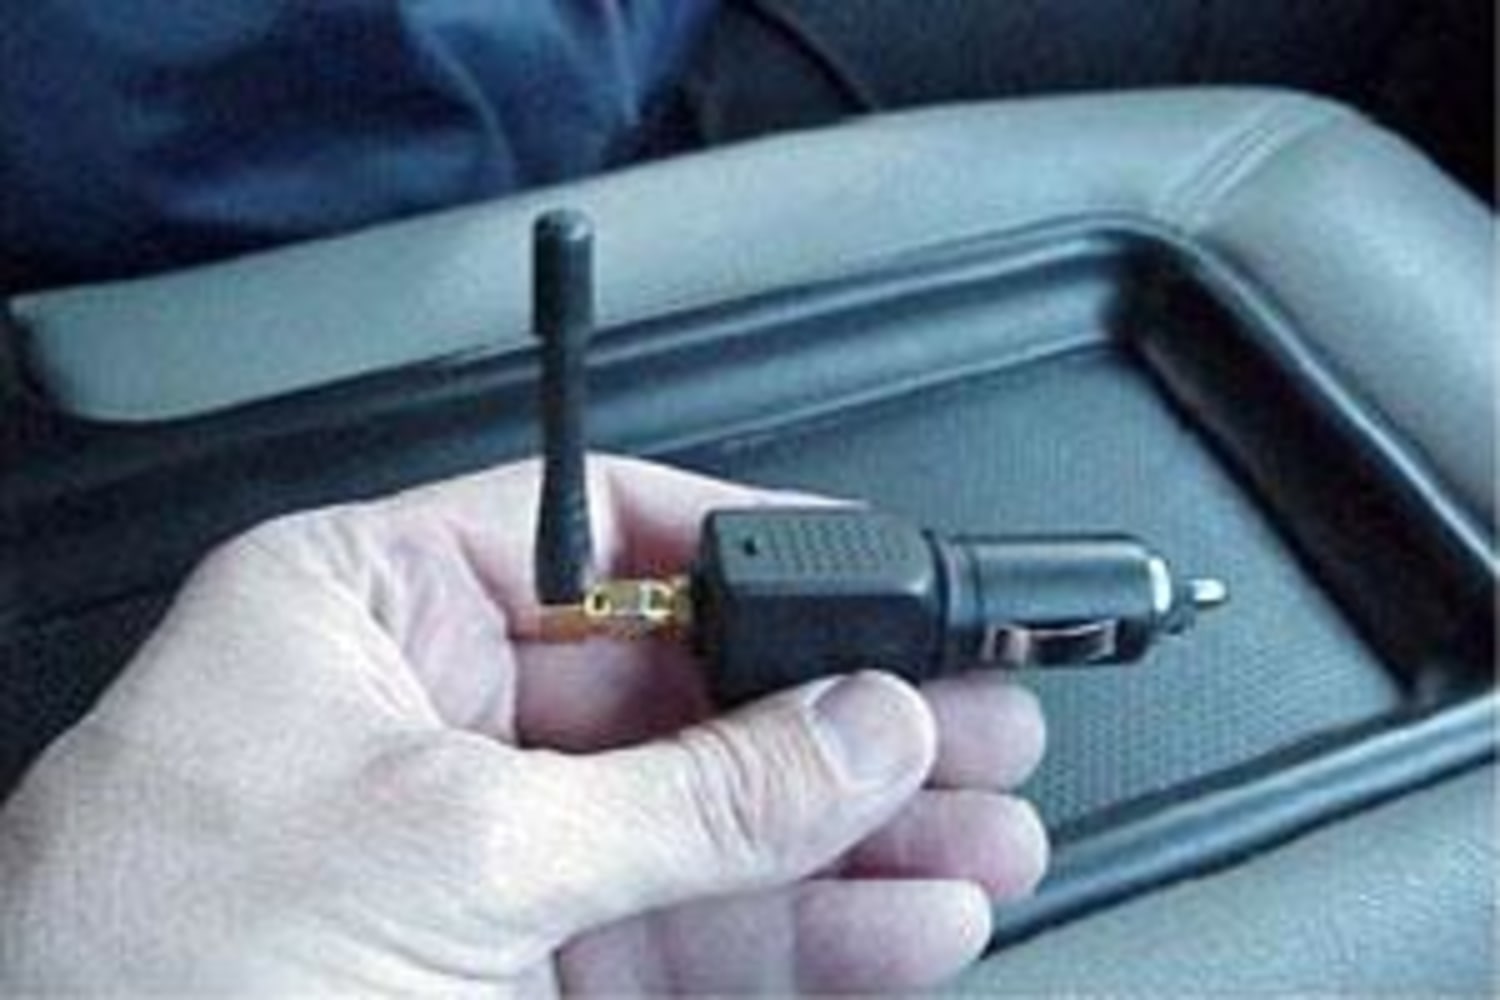 GPS jammers can wreak havoc, cover crimes